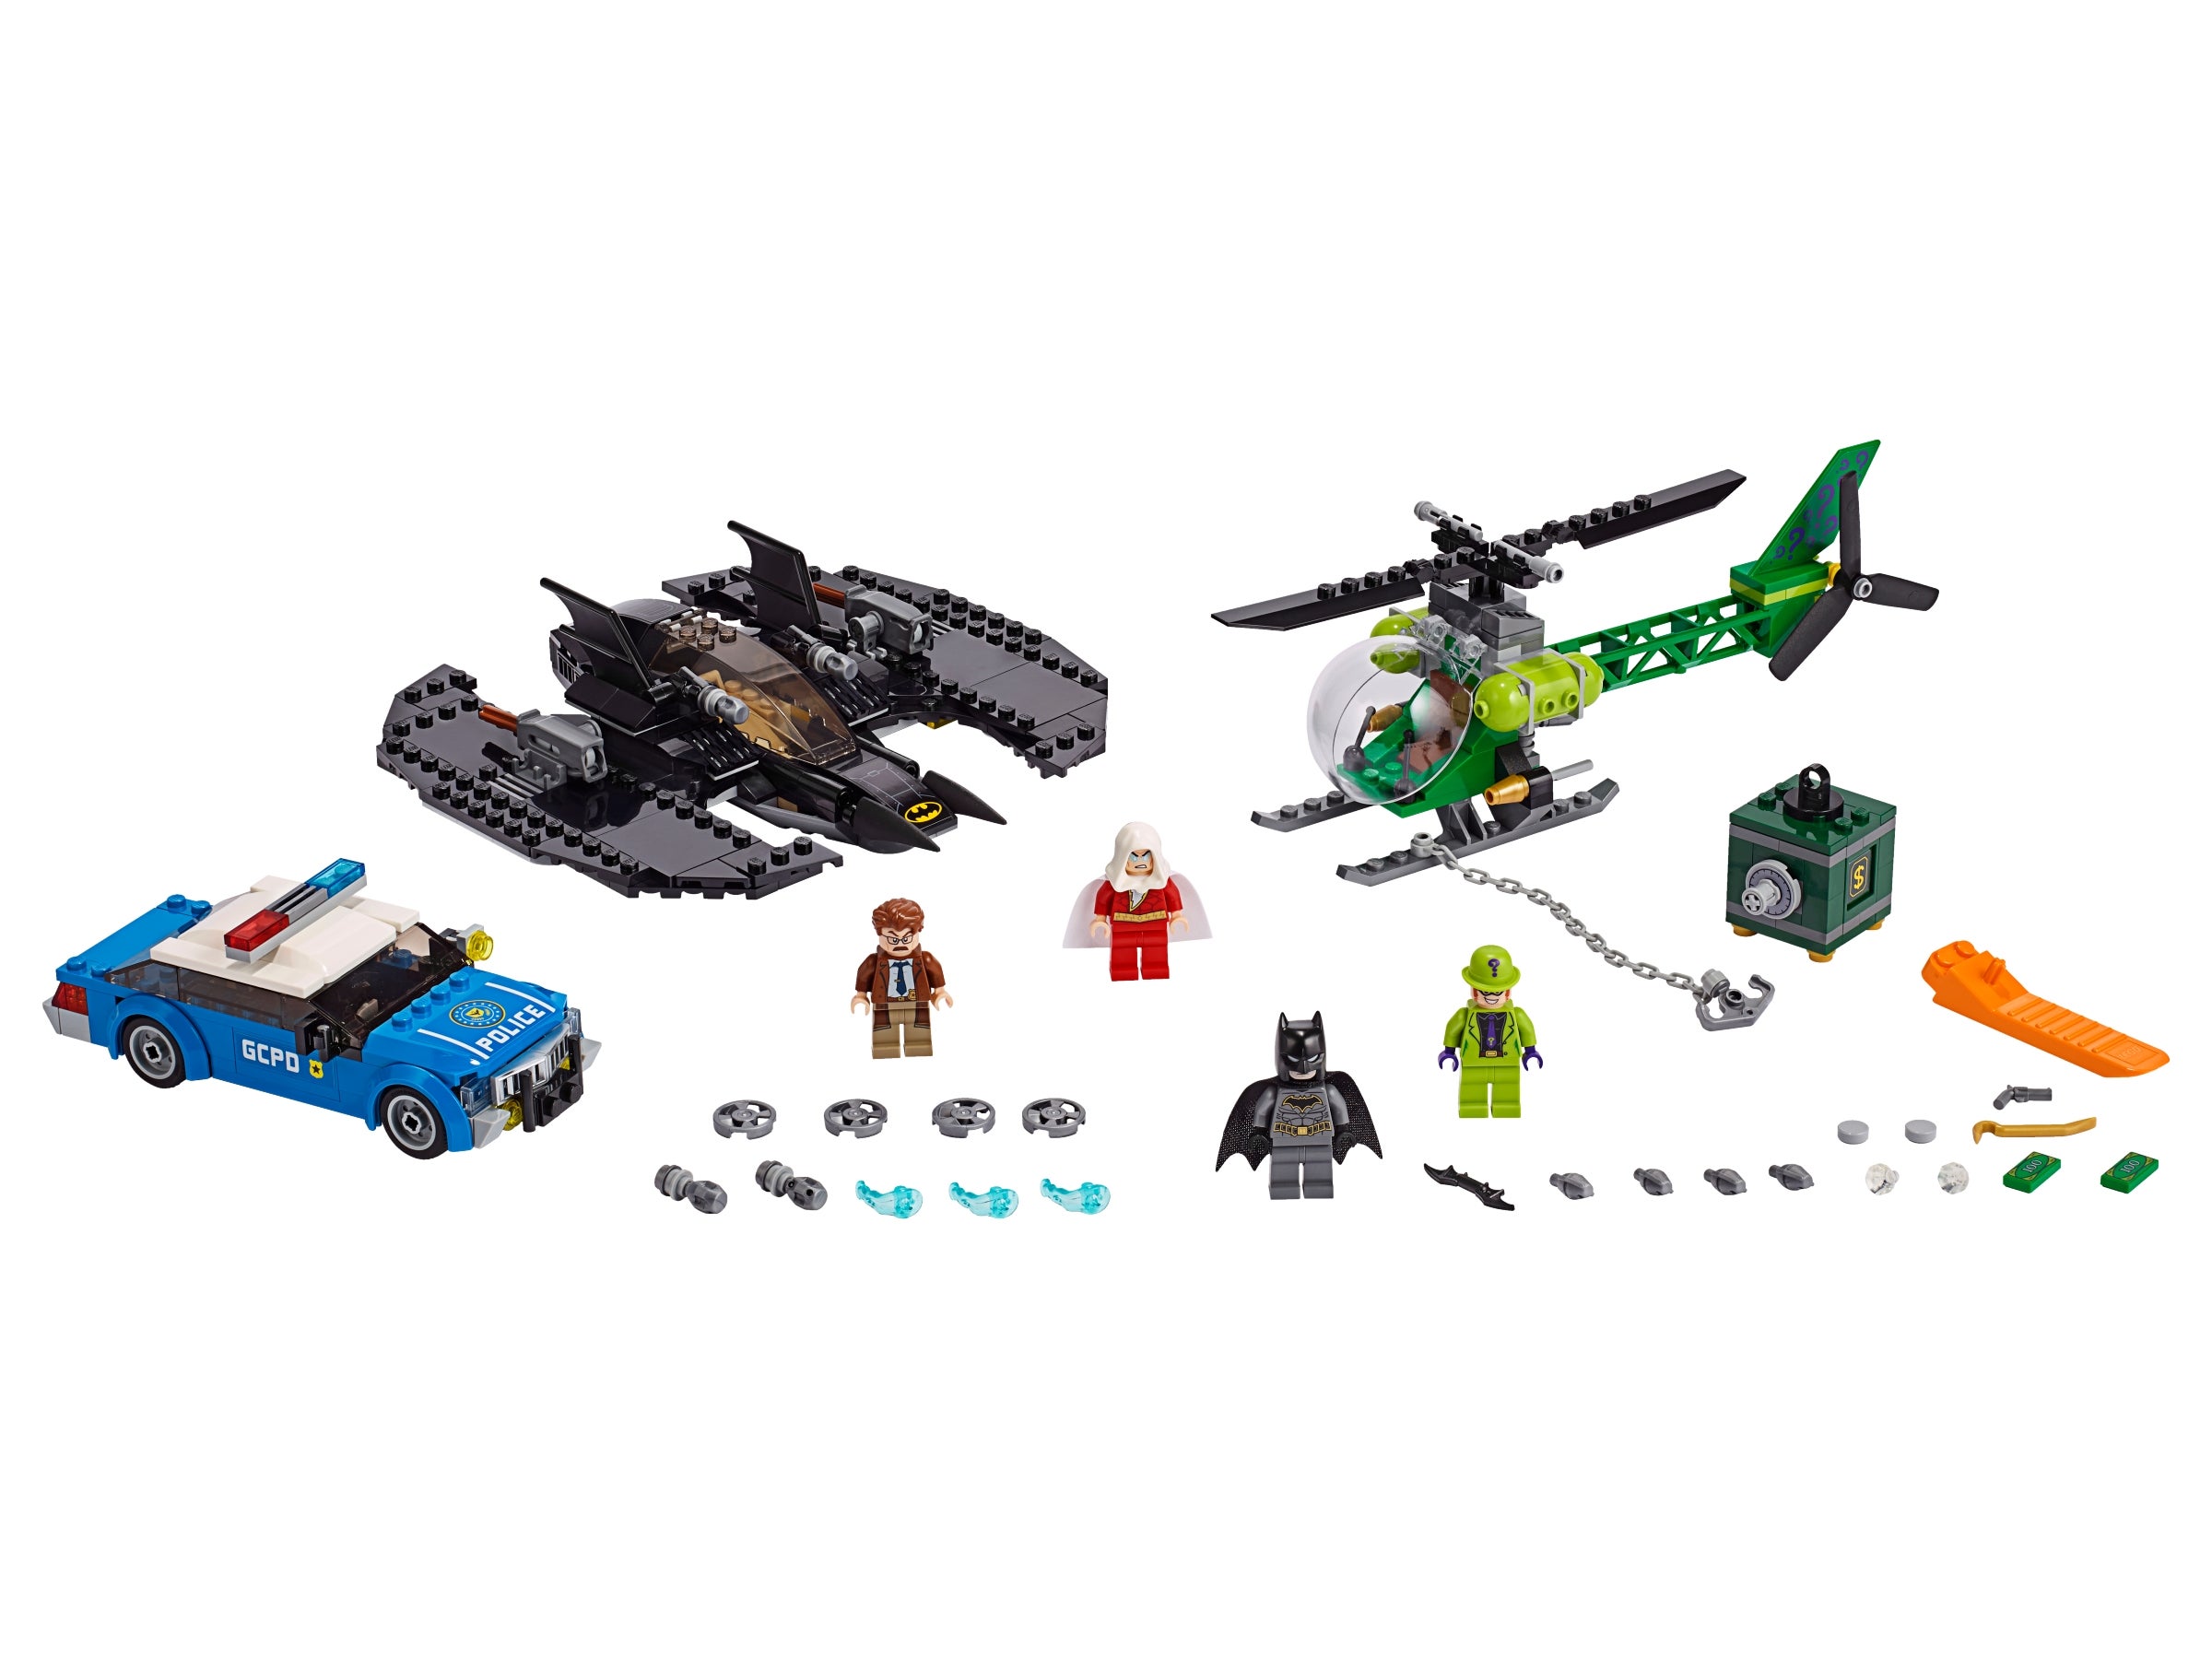 LEGO 2019 DC Super Heroes The Riddler Minifigure 76120 for sale online